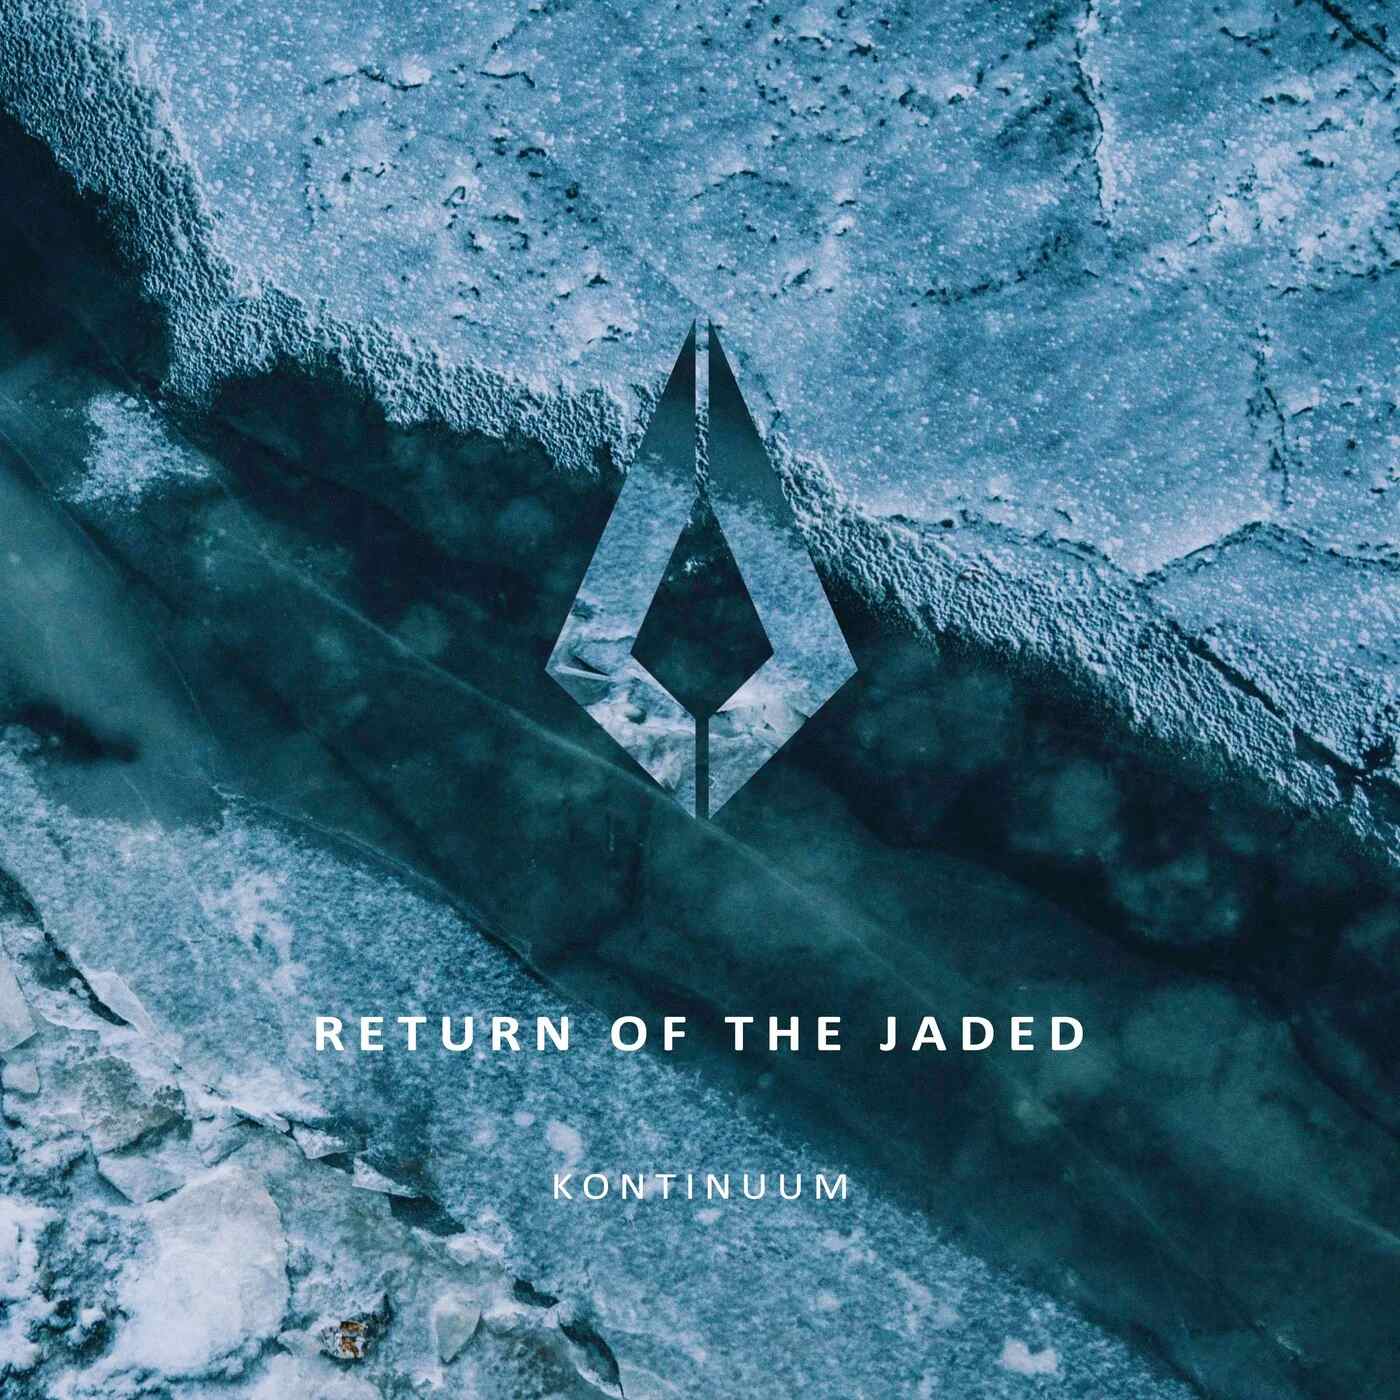 Return of the Jaded - Kontinuum (Extended Mix)